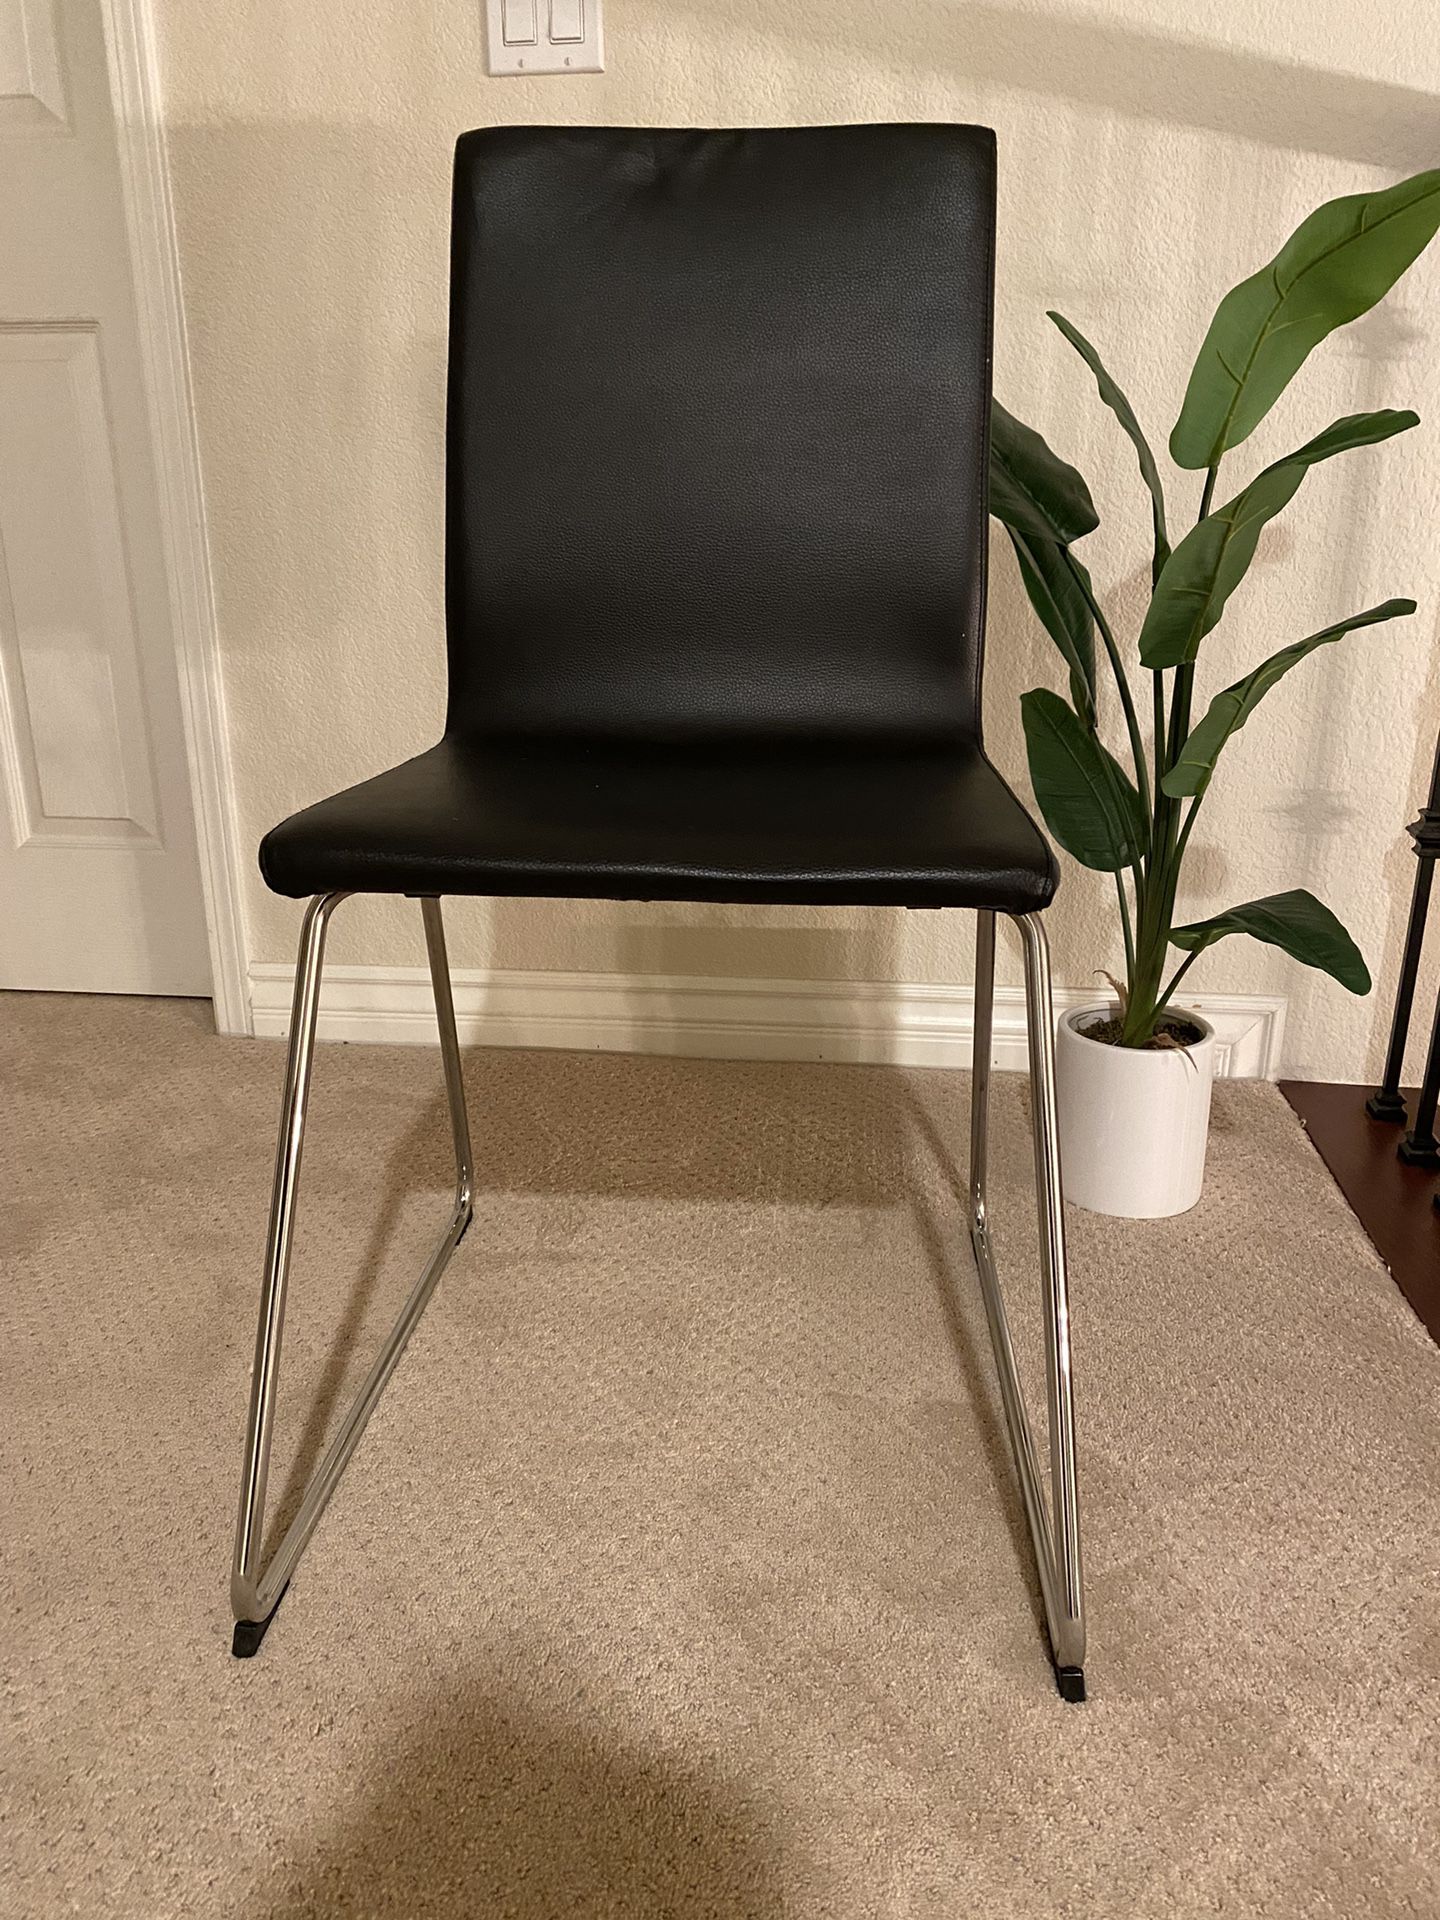 Steel Chrome Plated Chair Ikea Golfgang